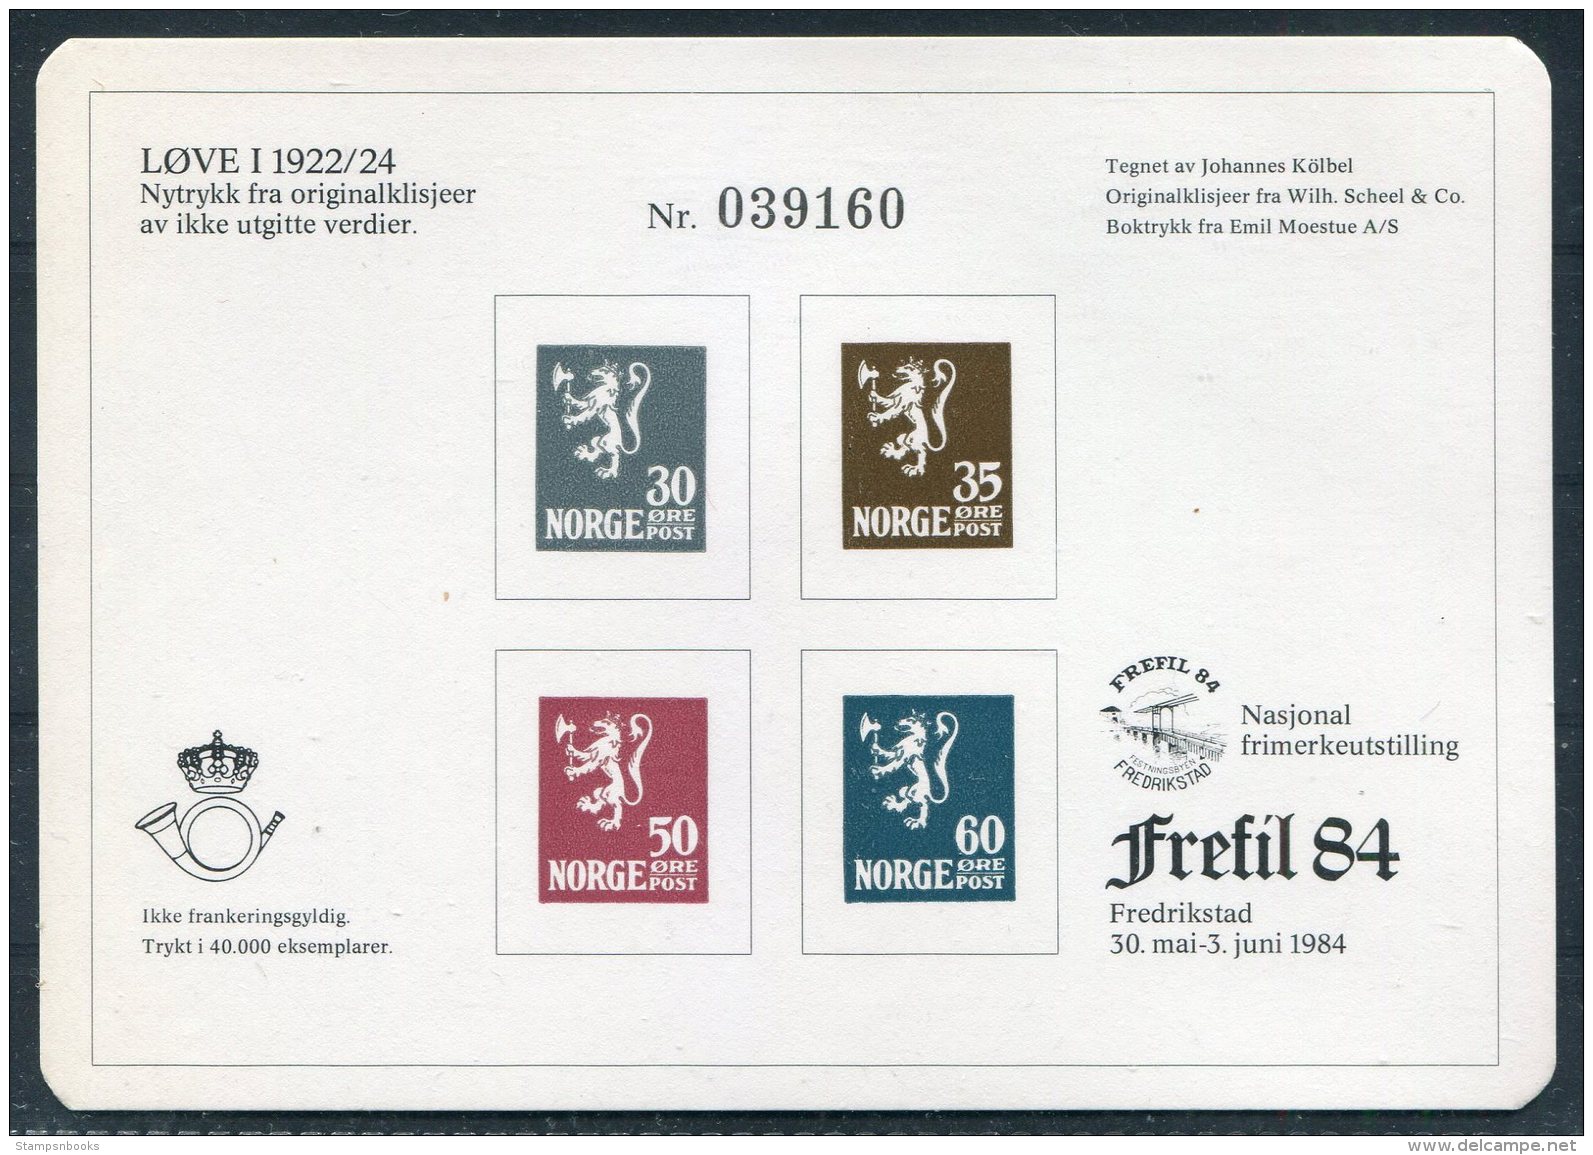 1984 Norway Stamp Exhibition Souvenir Sheet FREFIL 84 - Ensayos & Reimpresiones